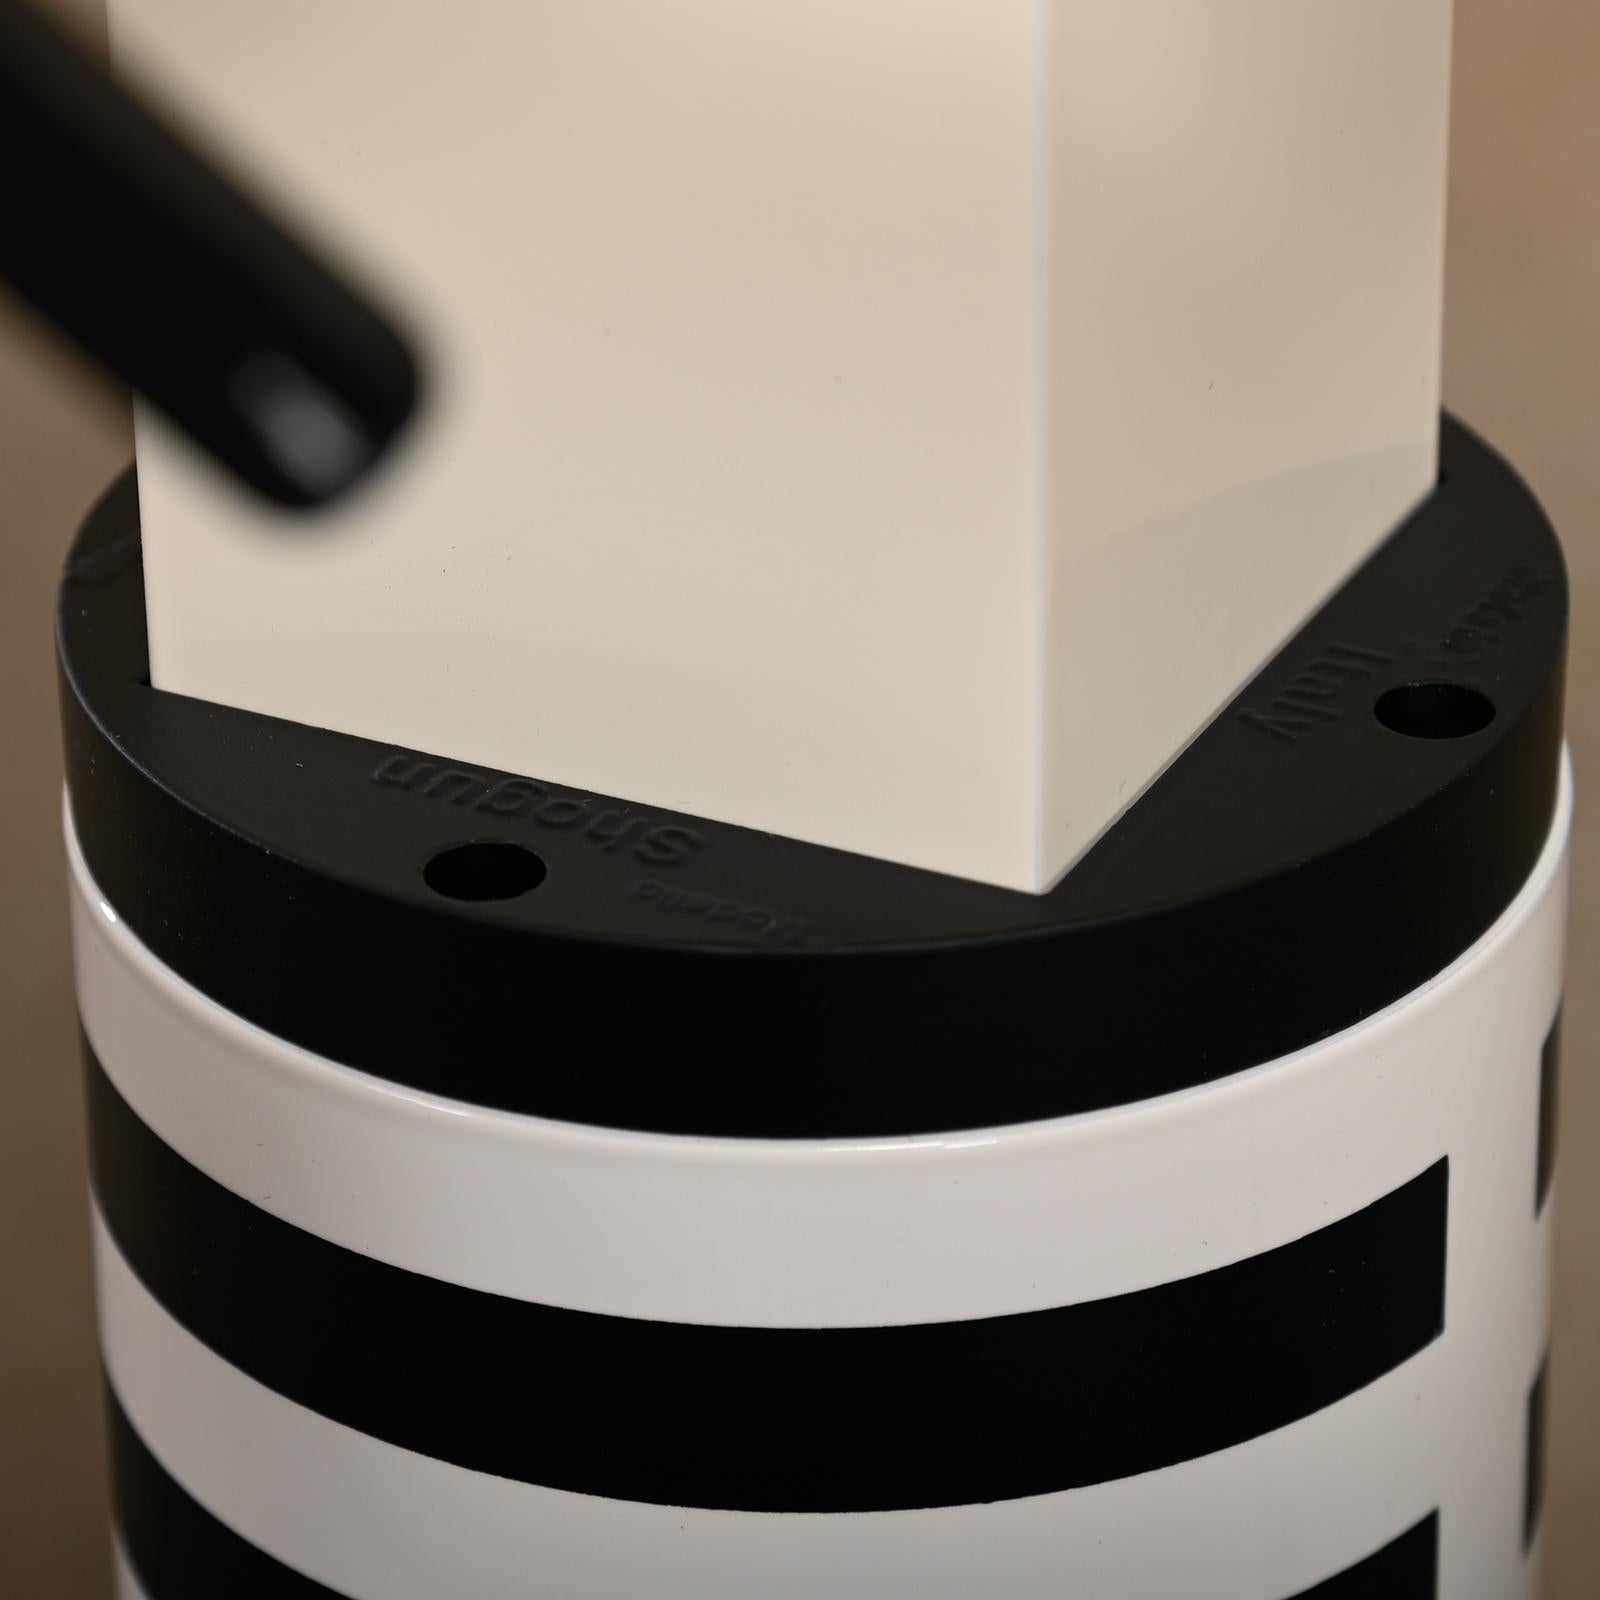 Mario Botta Shogun Table Lamp in black and white for Artemide, Italy For Sale 2